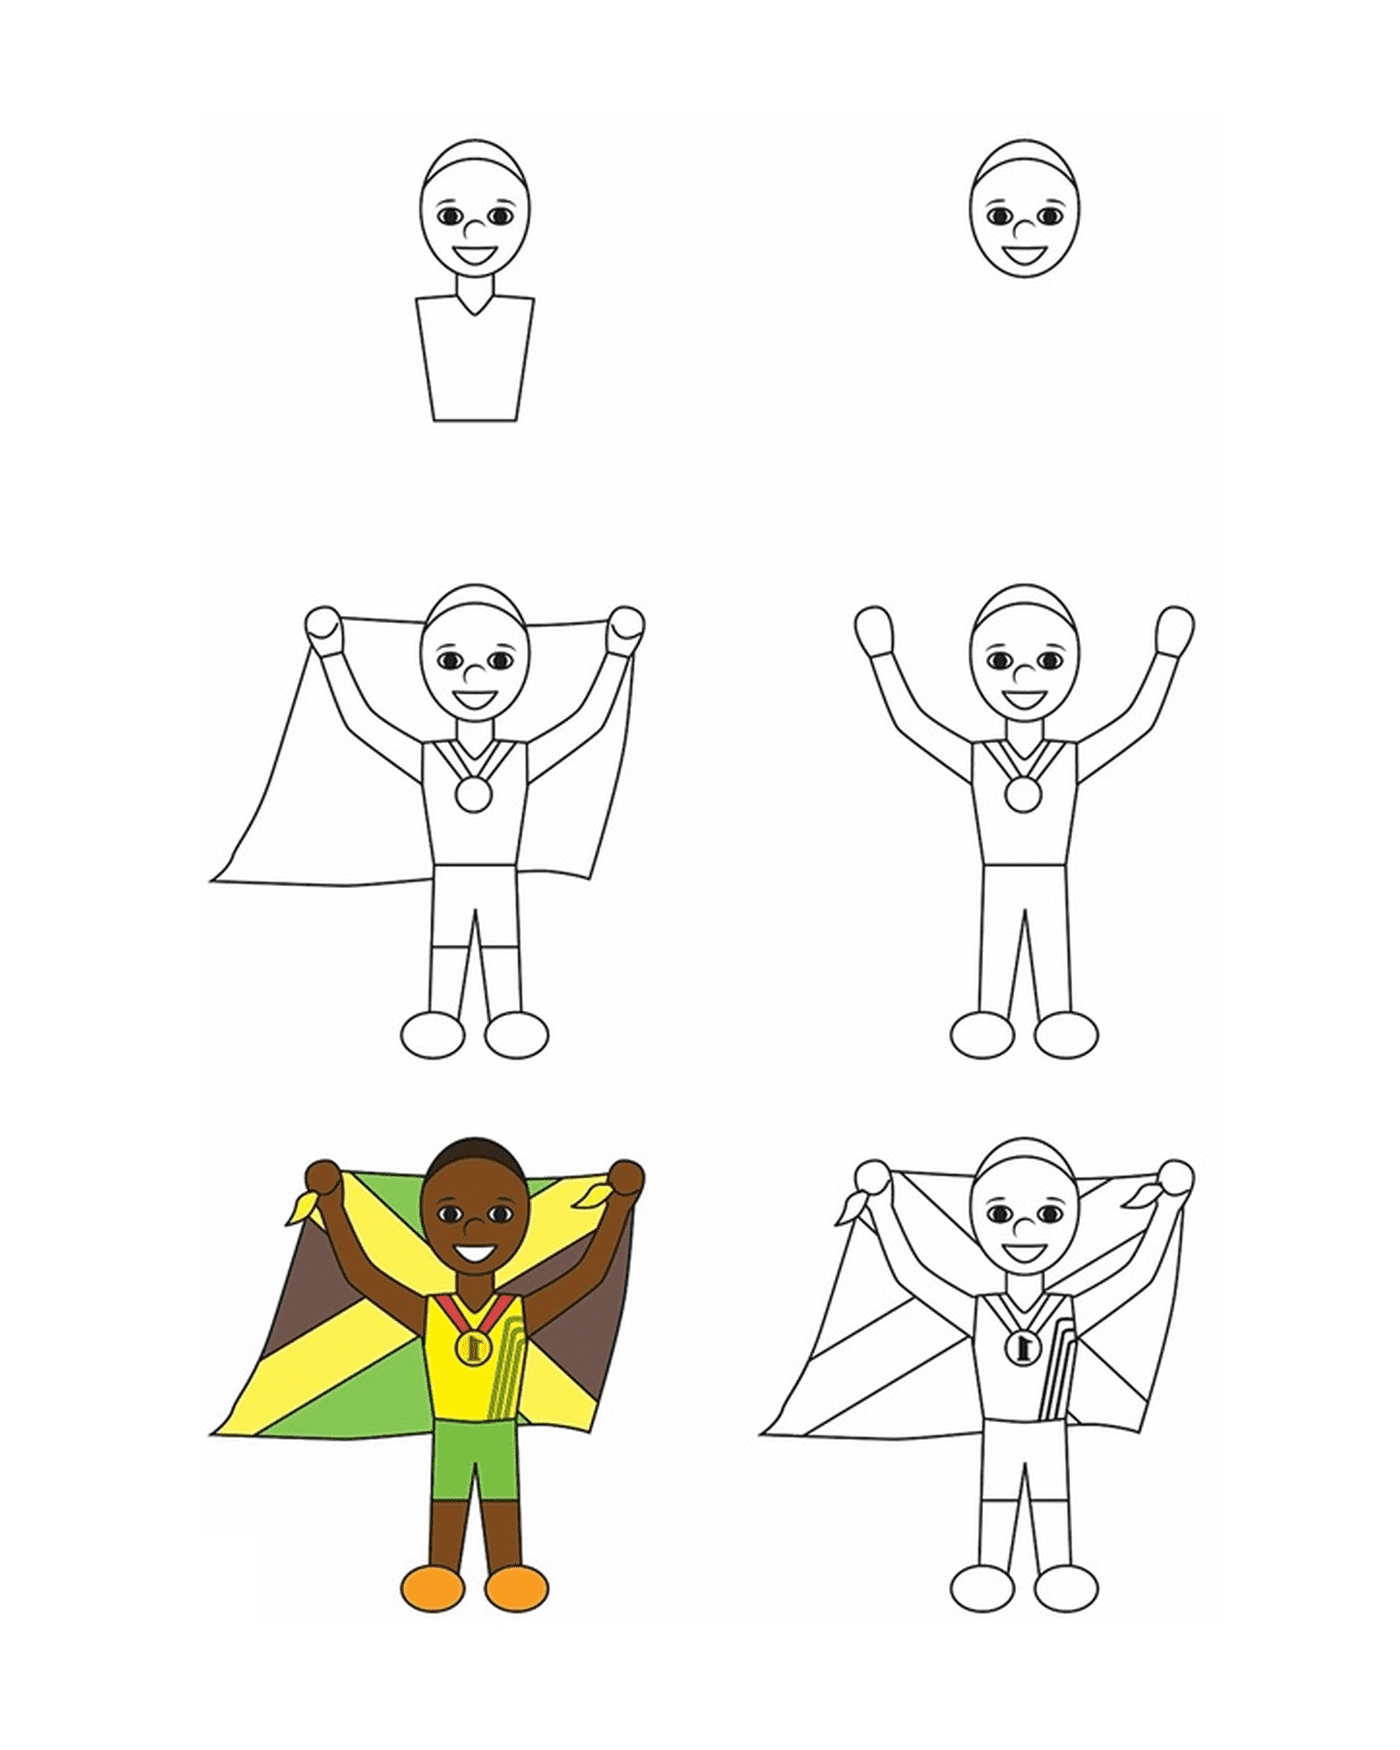  How to draw Usain Bolt 